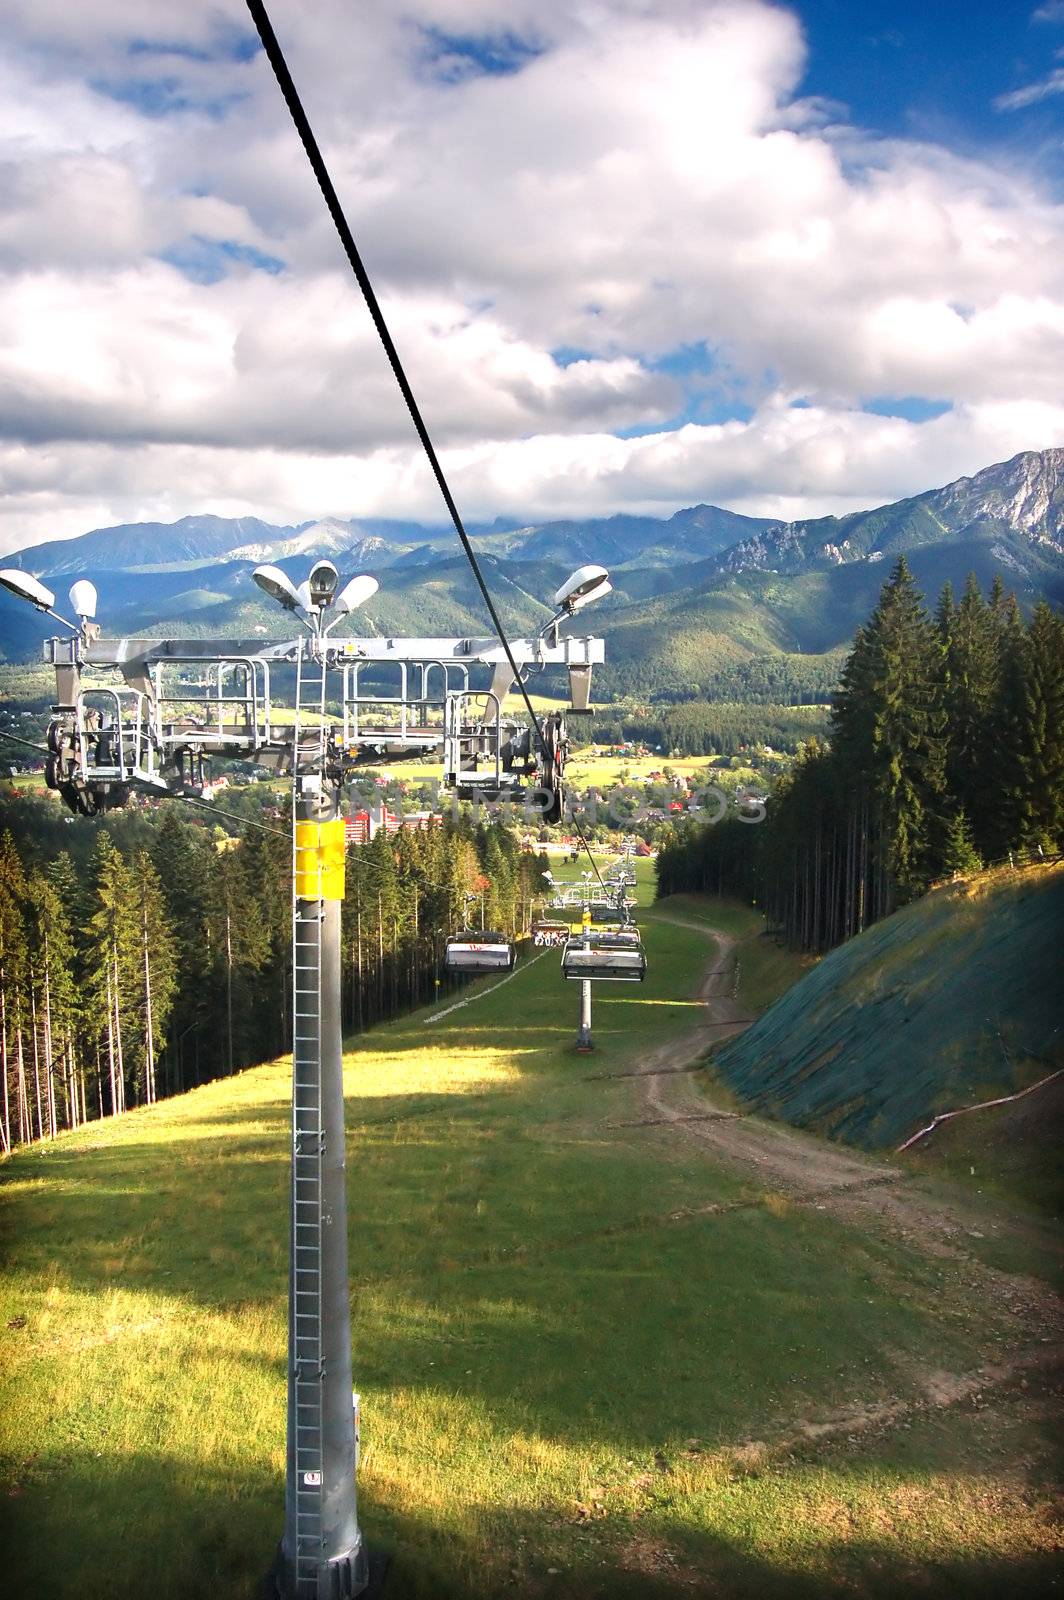 A chair-lift in Tatra Mountains